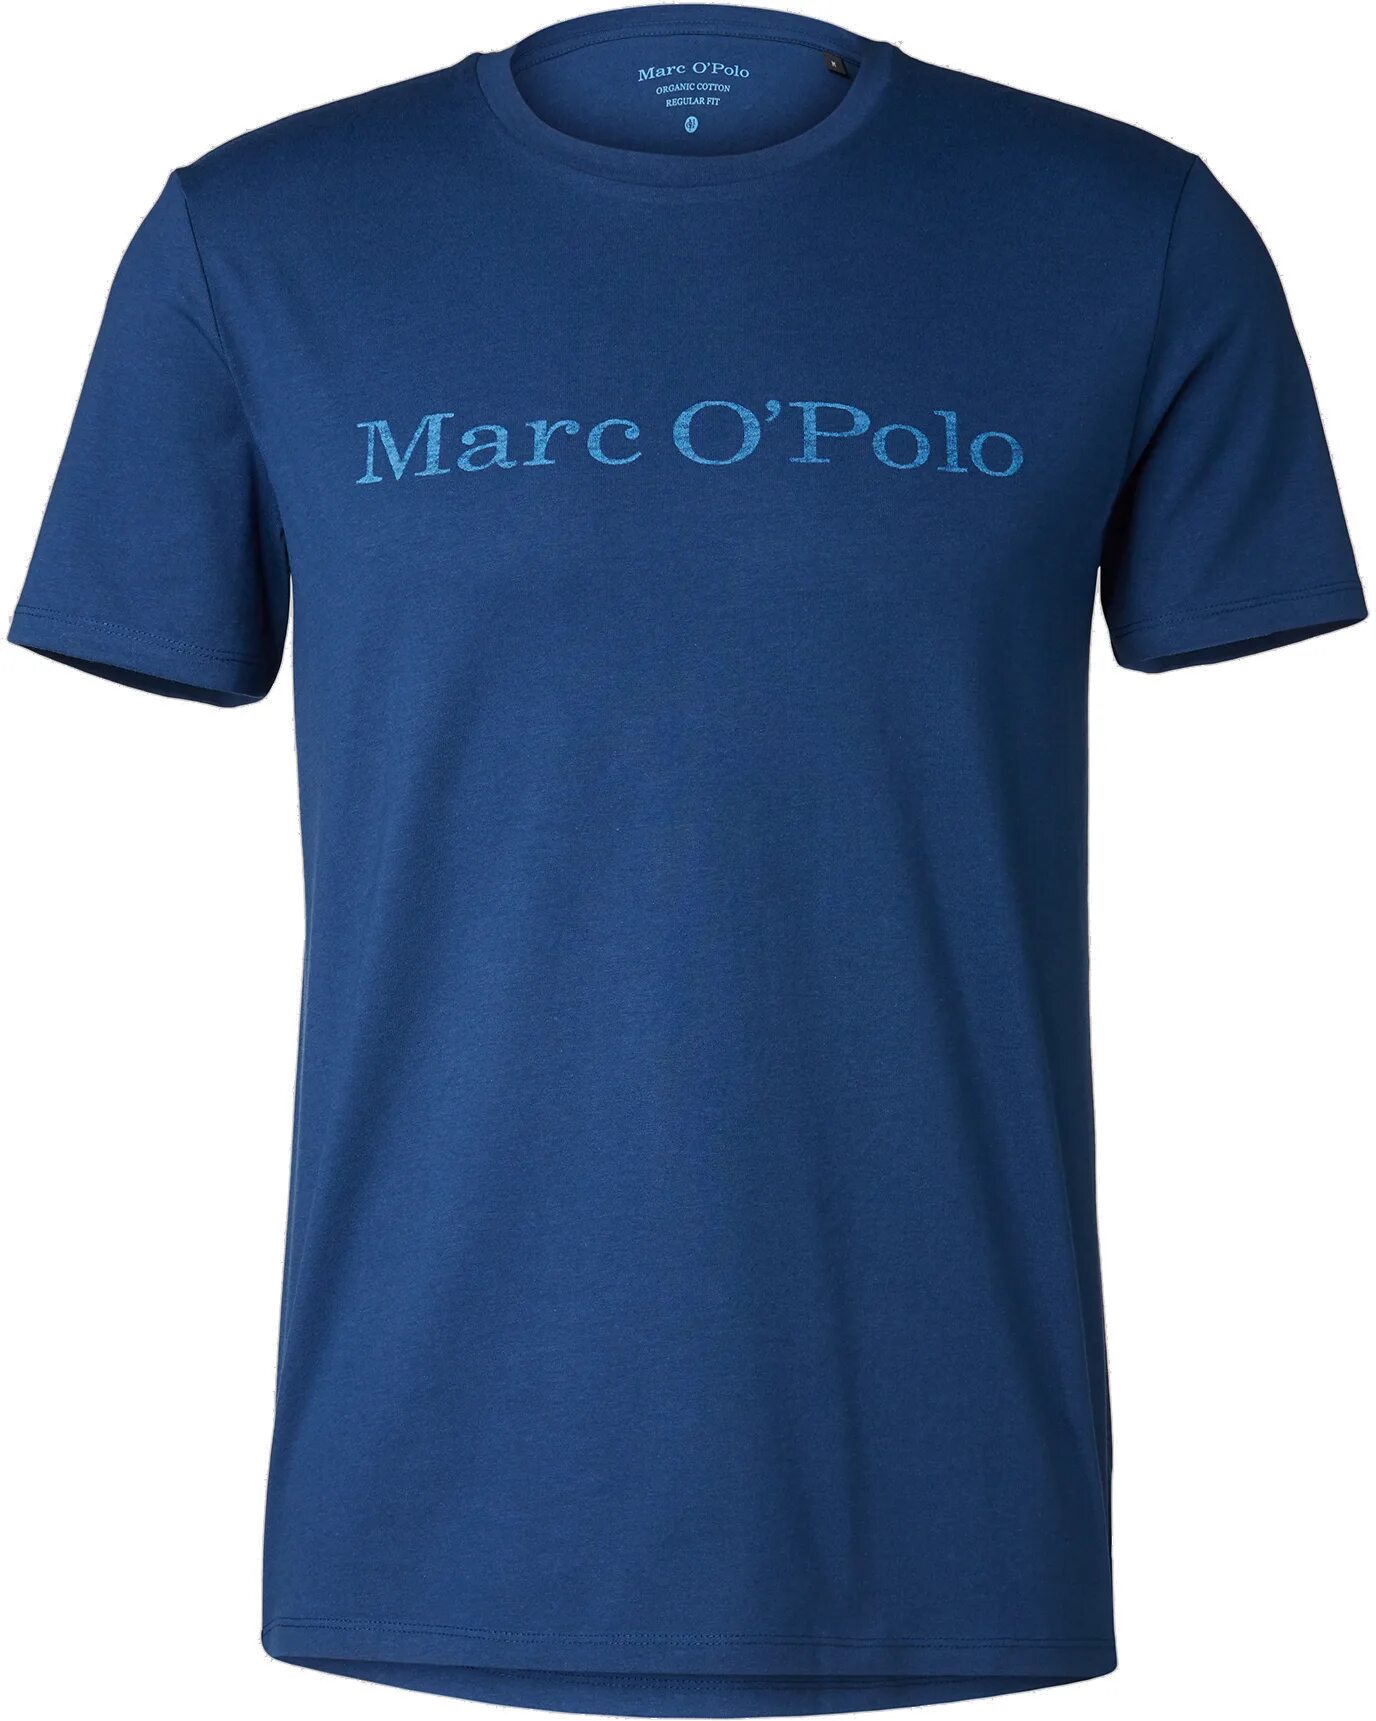 Тенниска-поло синий, XL (52). Футболка Марко поло. Поло Marc o'Polo. Поло Marco Polo. Авито марко поло